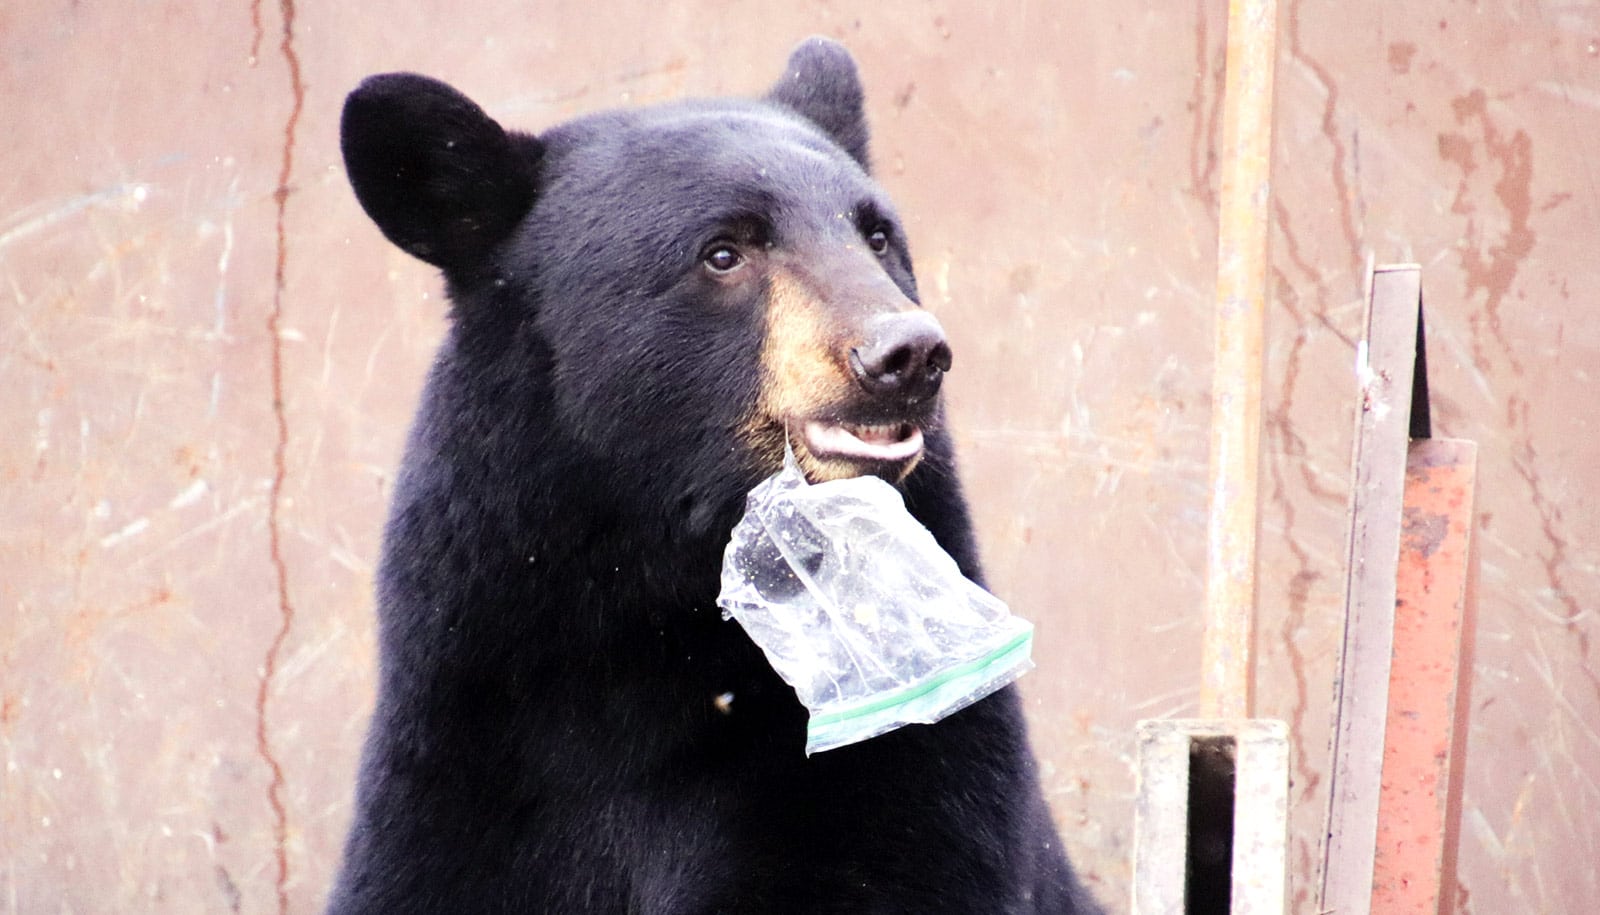 Eating human food messes up black bears' gut microbiome - Futurity